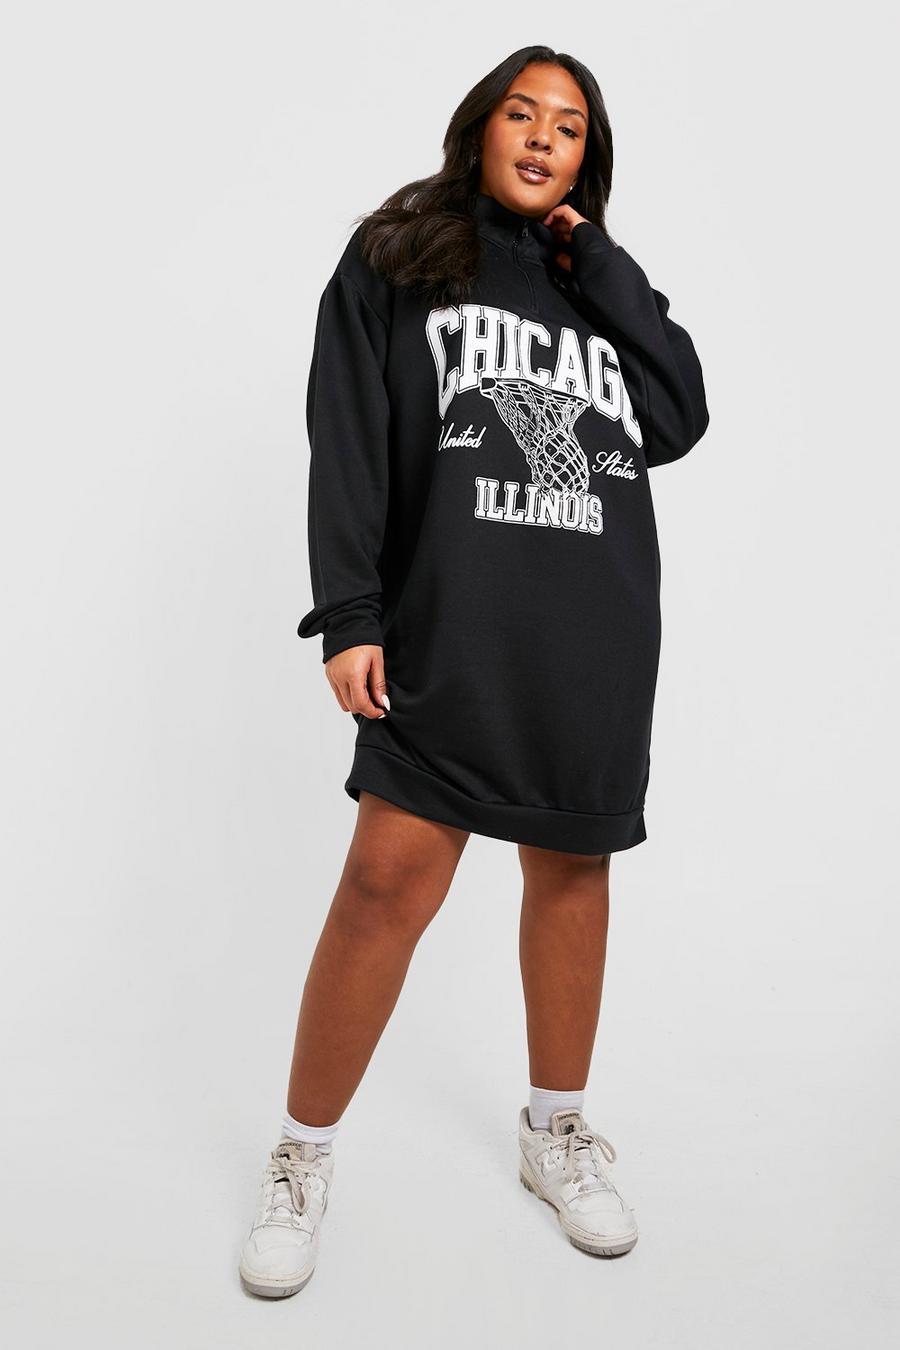 Grande taille - Robe sweat à slogan Chicago, Black image number 1